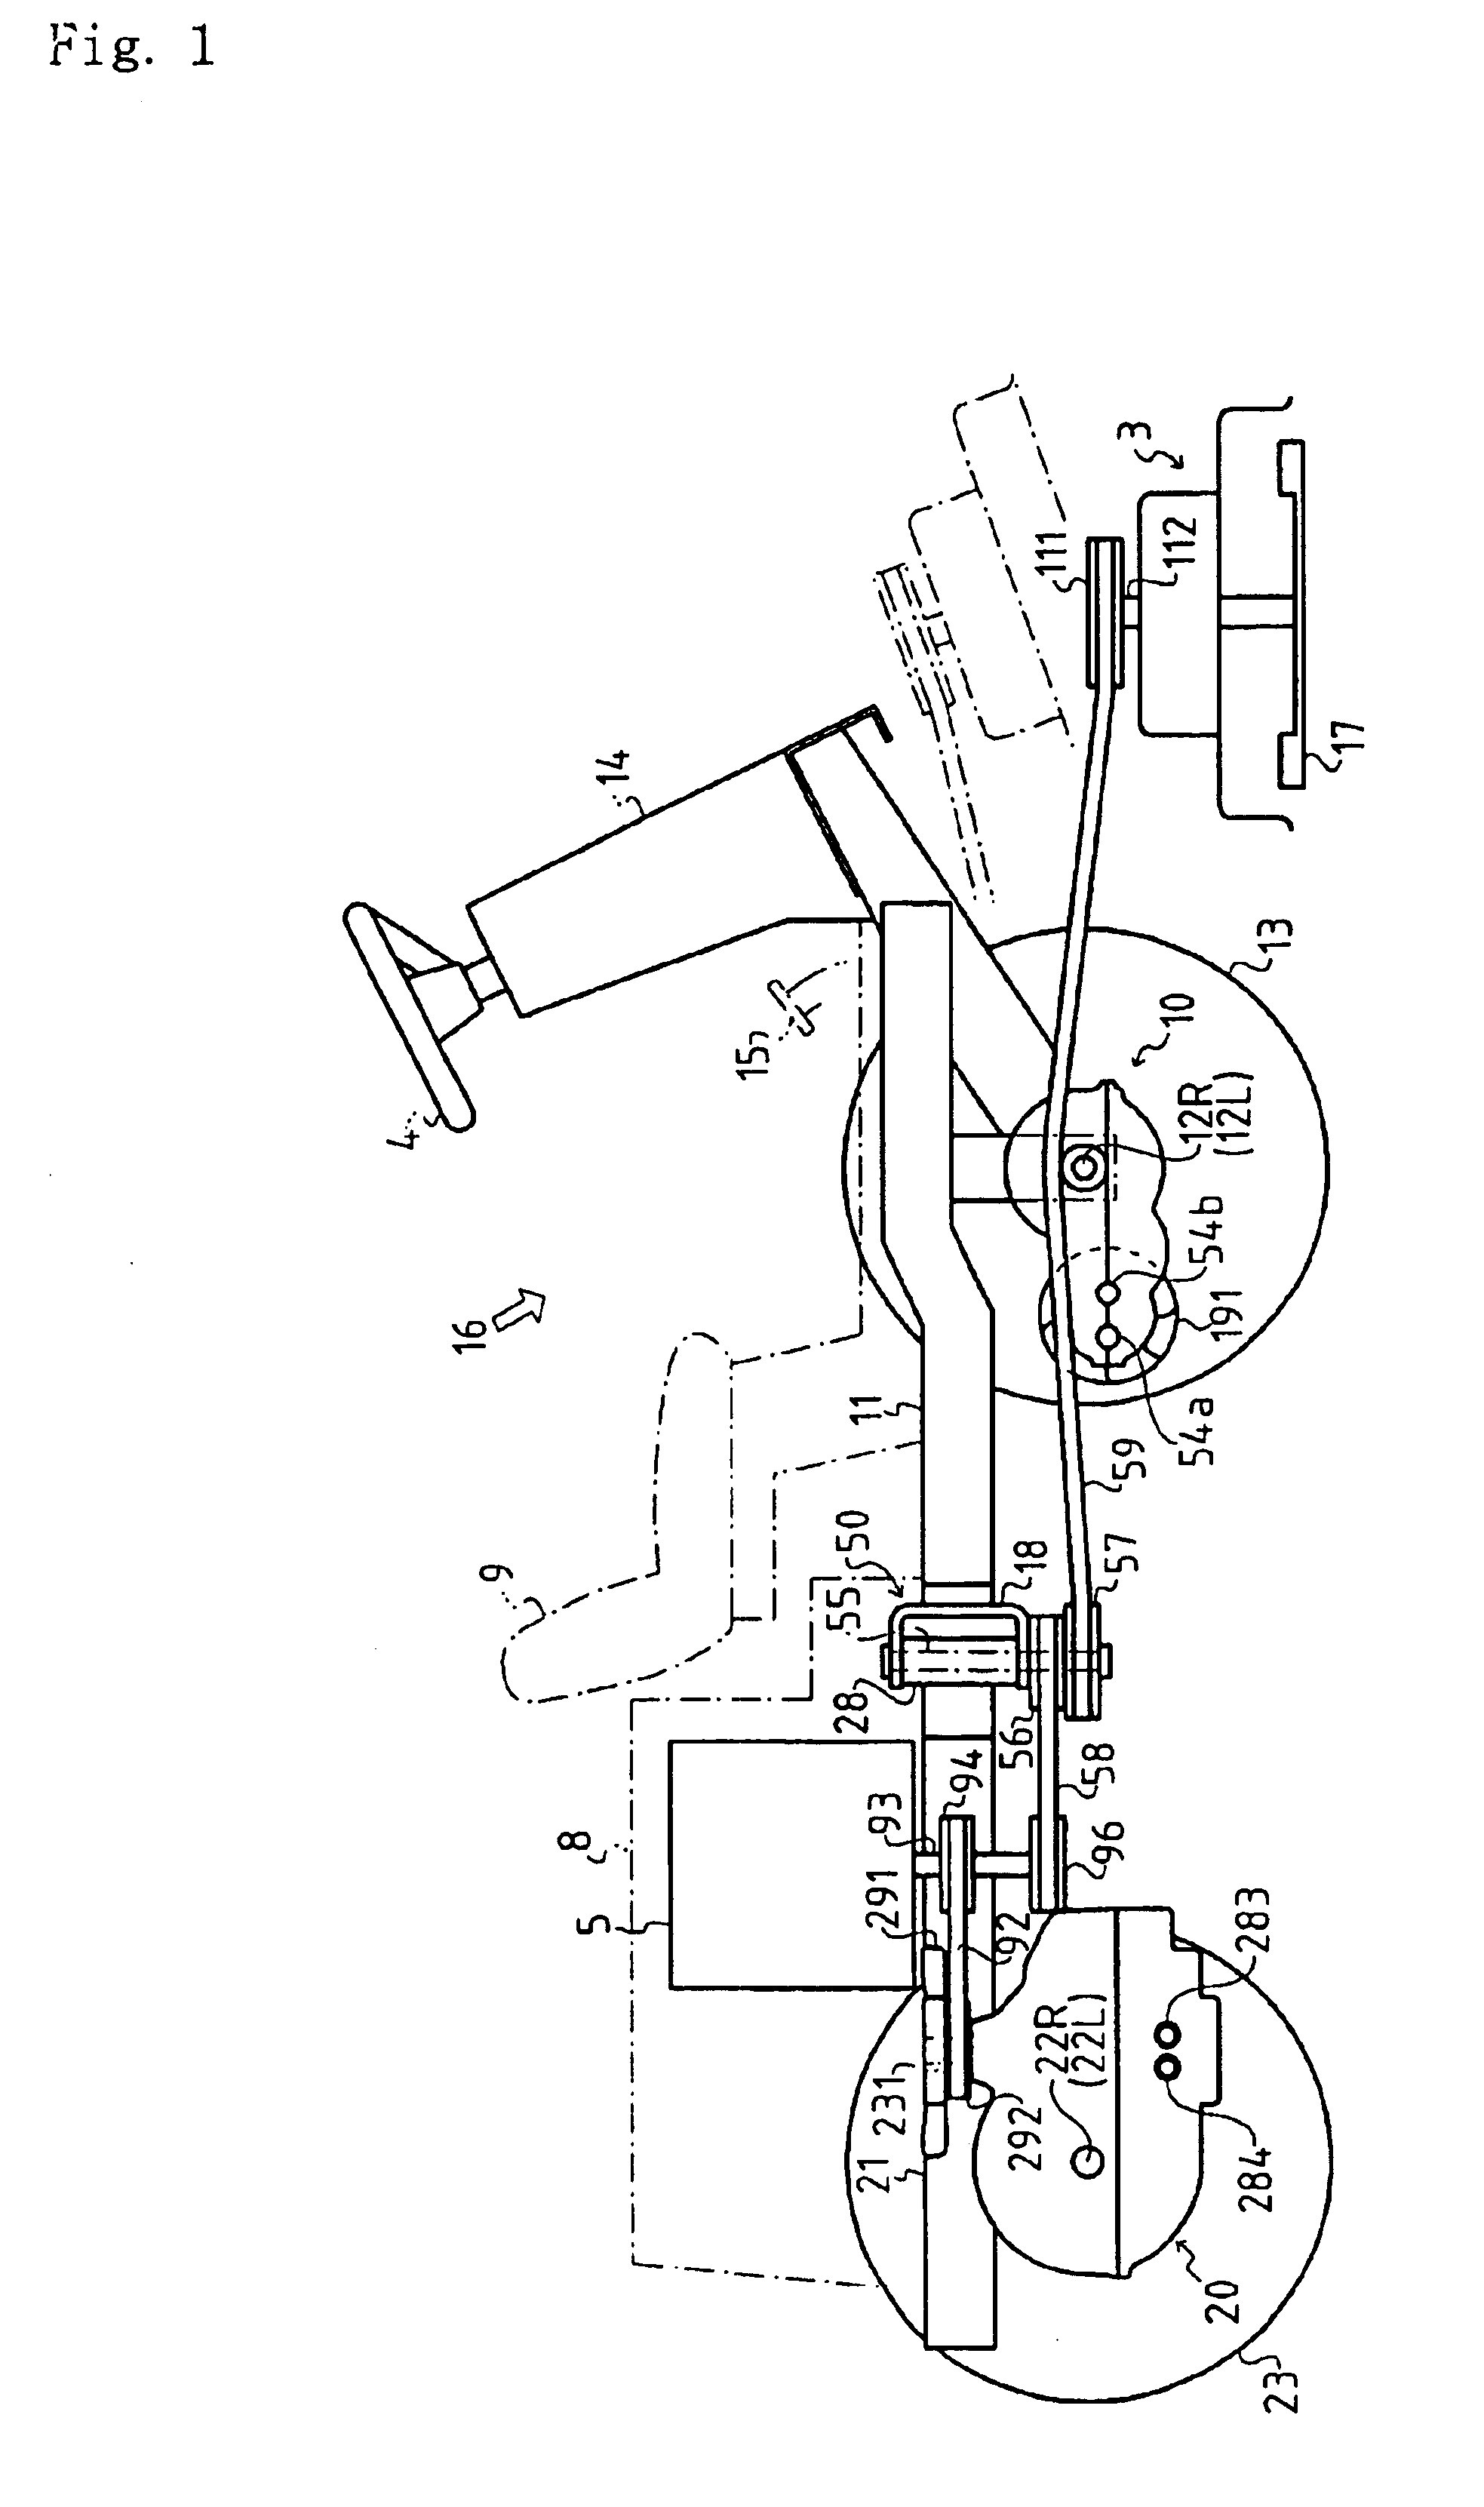 Hydraulic transaxle apparatus for a four-wheel driving vehicle and four-wheel driving vehicle using the apparatus